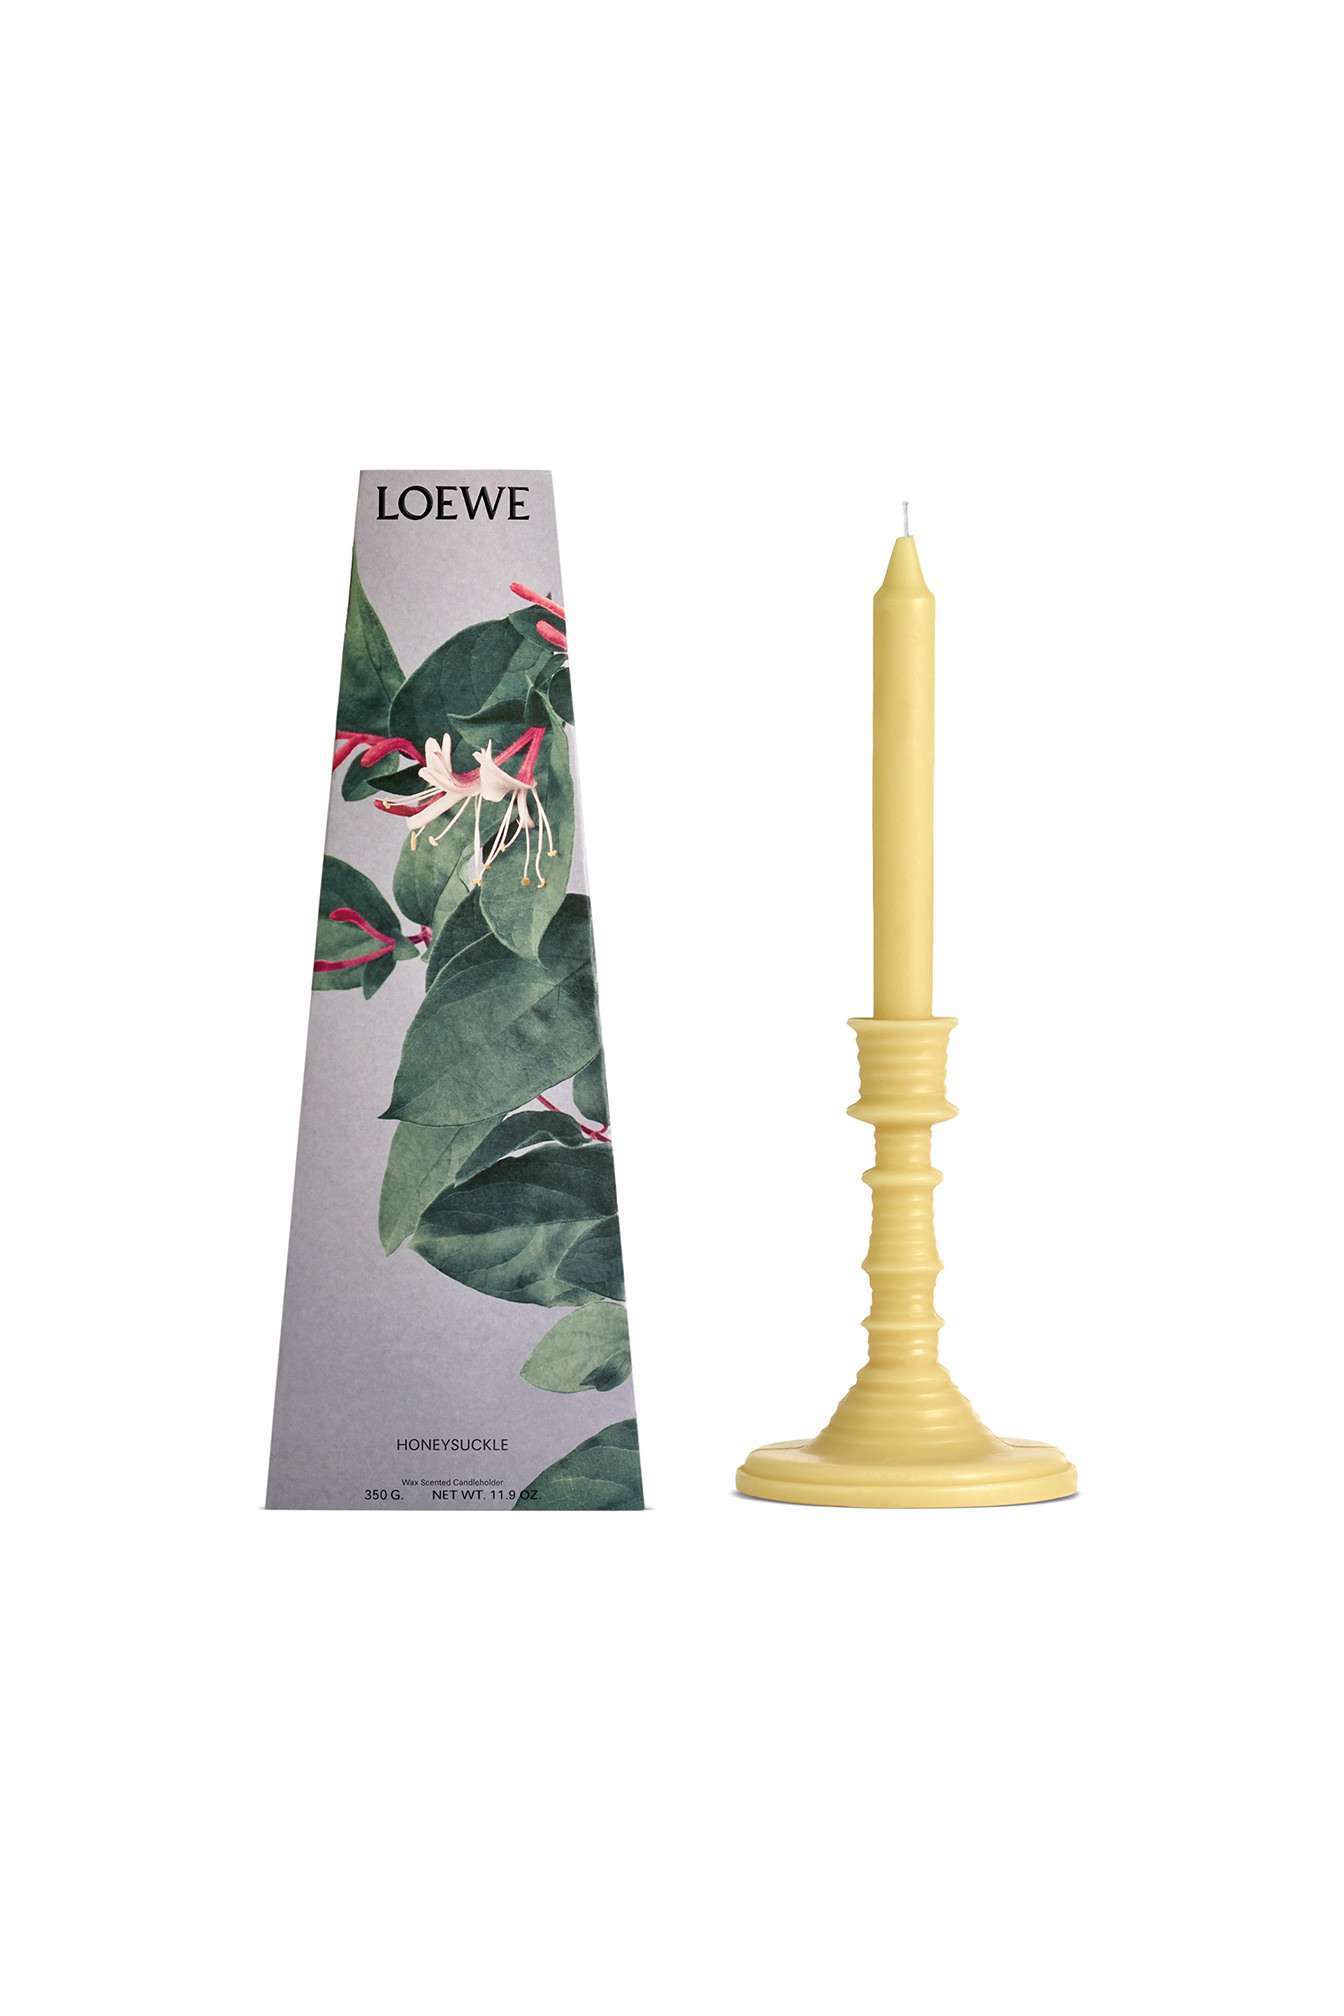 LOEWE-Scented-Wax-Candleholder-Honeysuckle-Packaging-Clear-cut